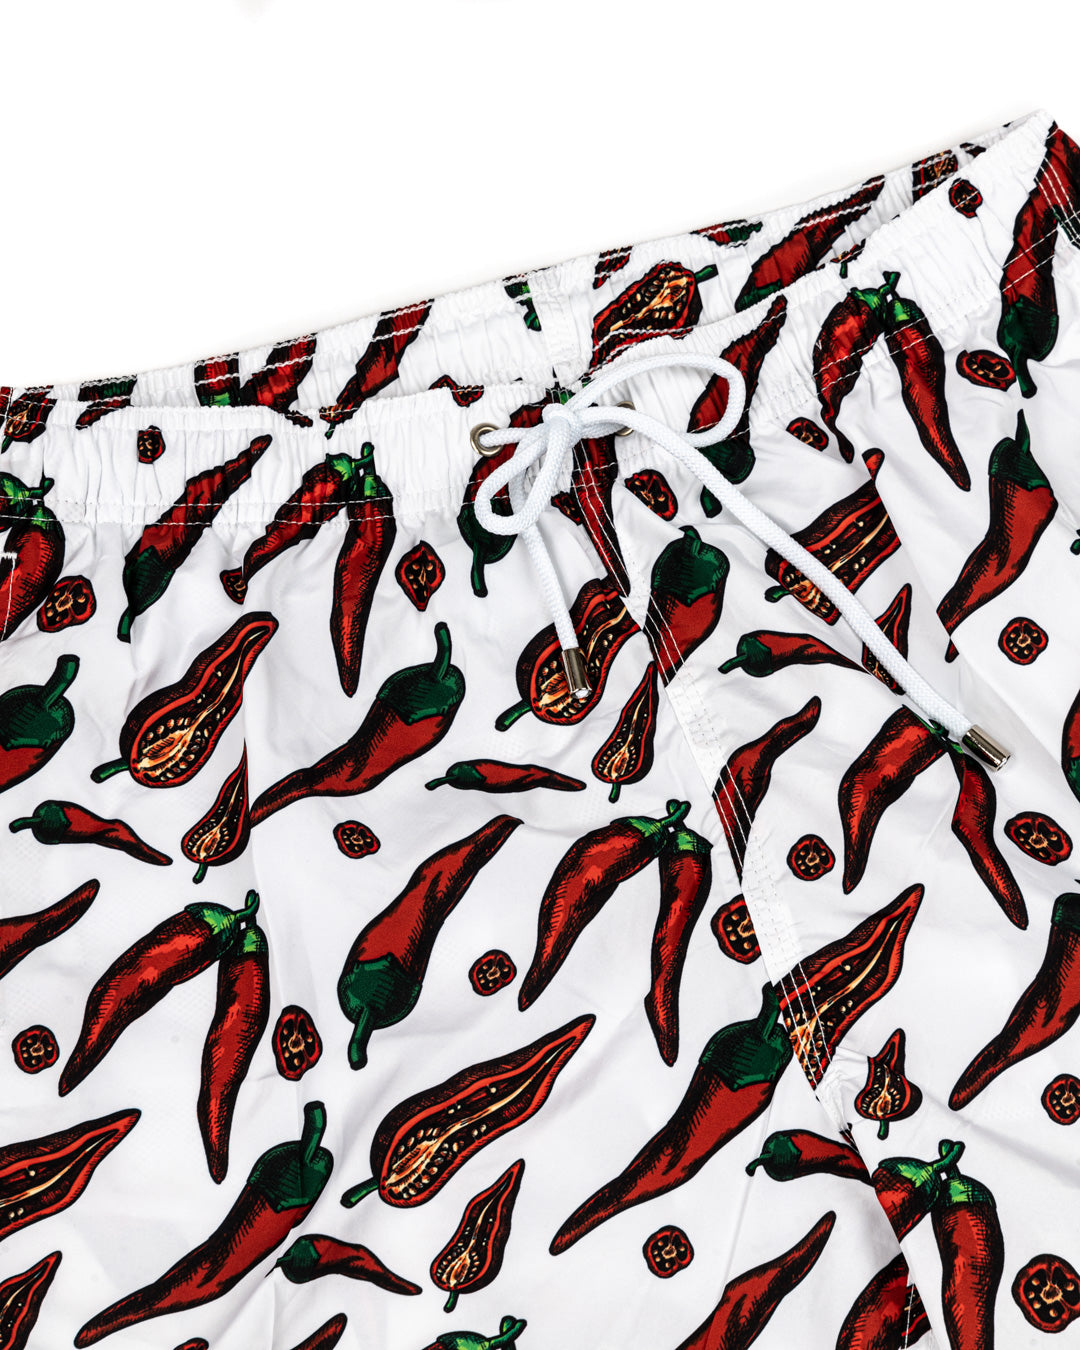 Swimsuit - White chili pepper pattern